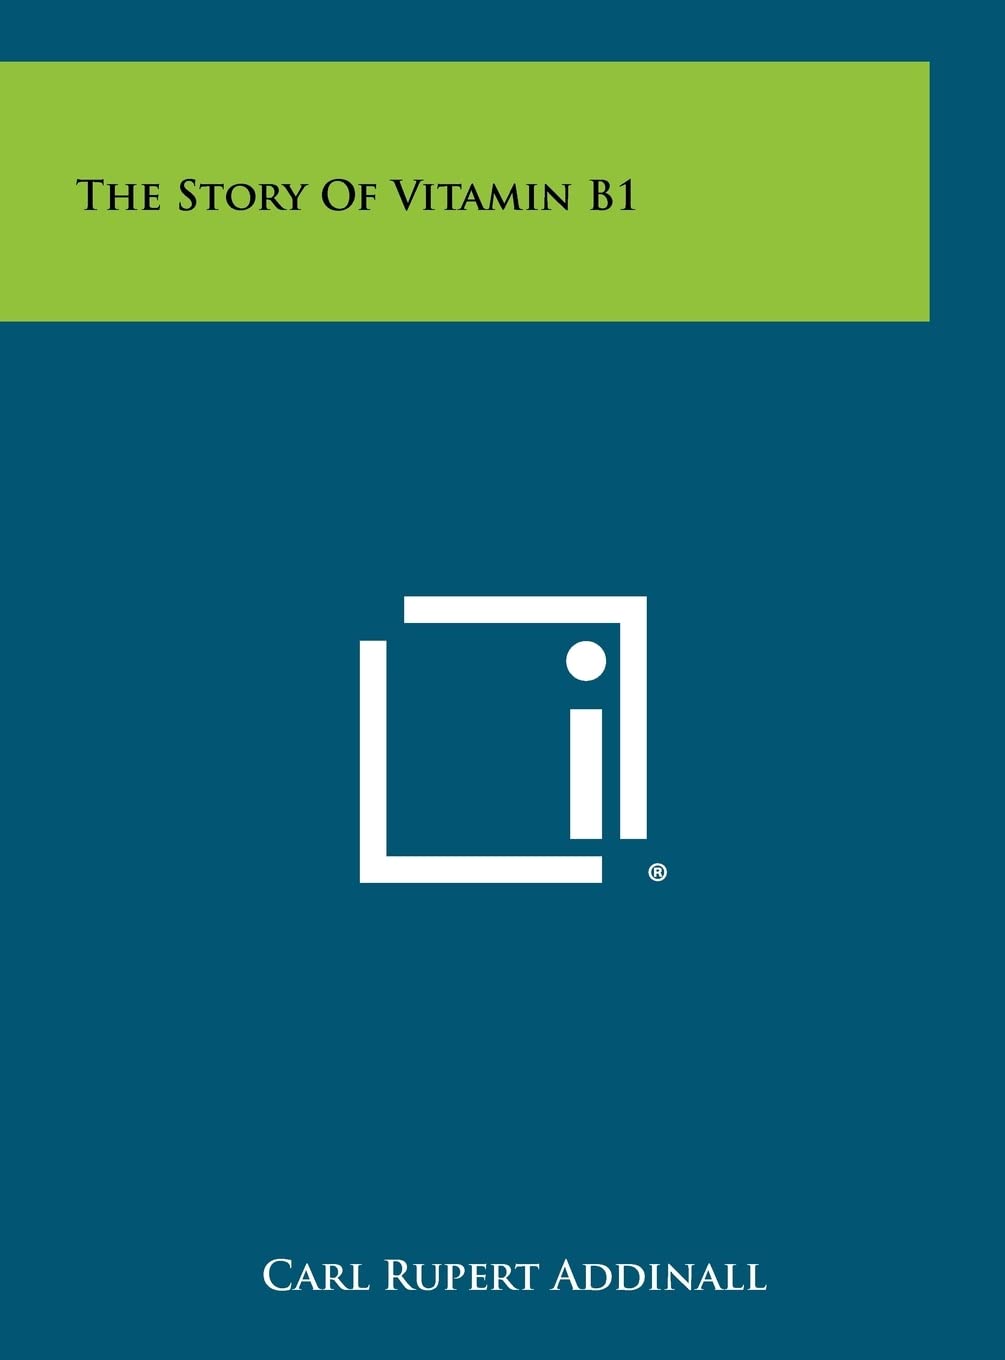 Vitamin B1: Brand Name Overview